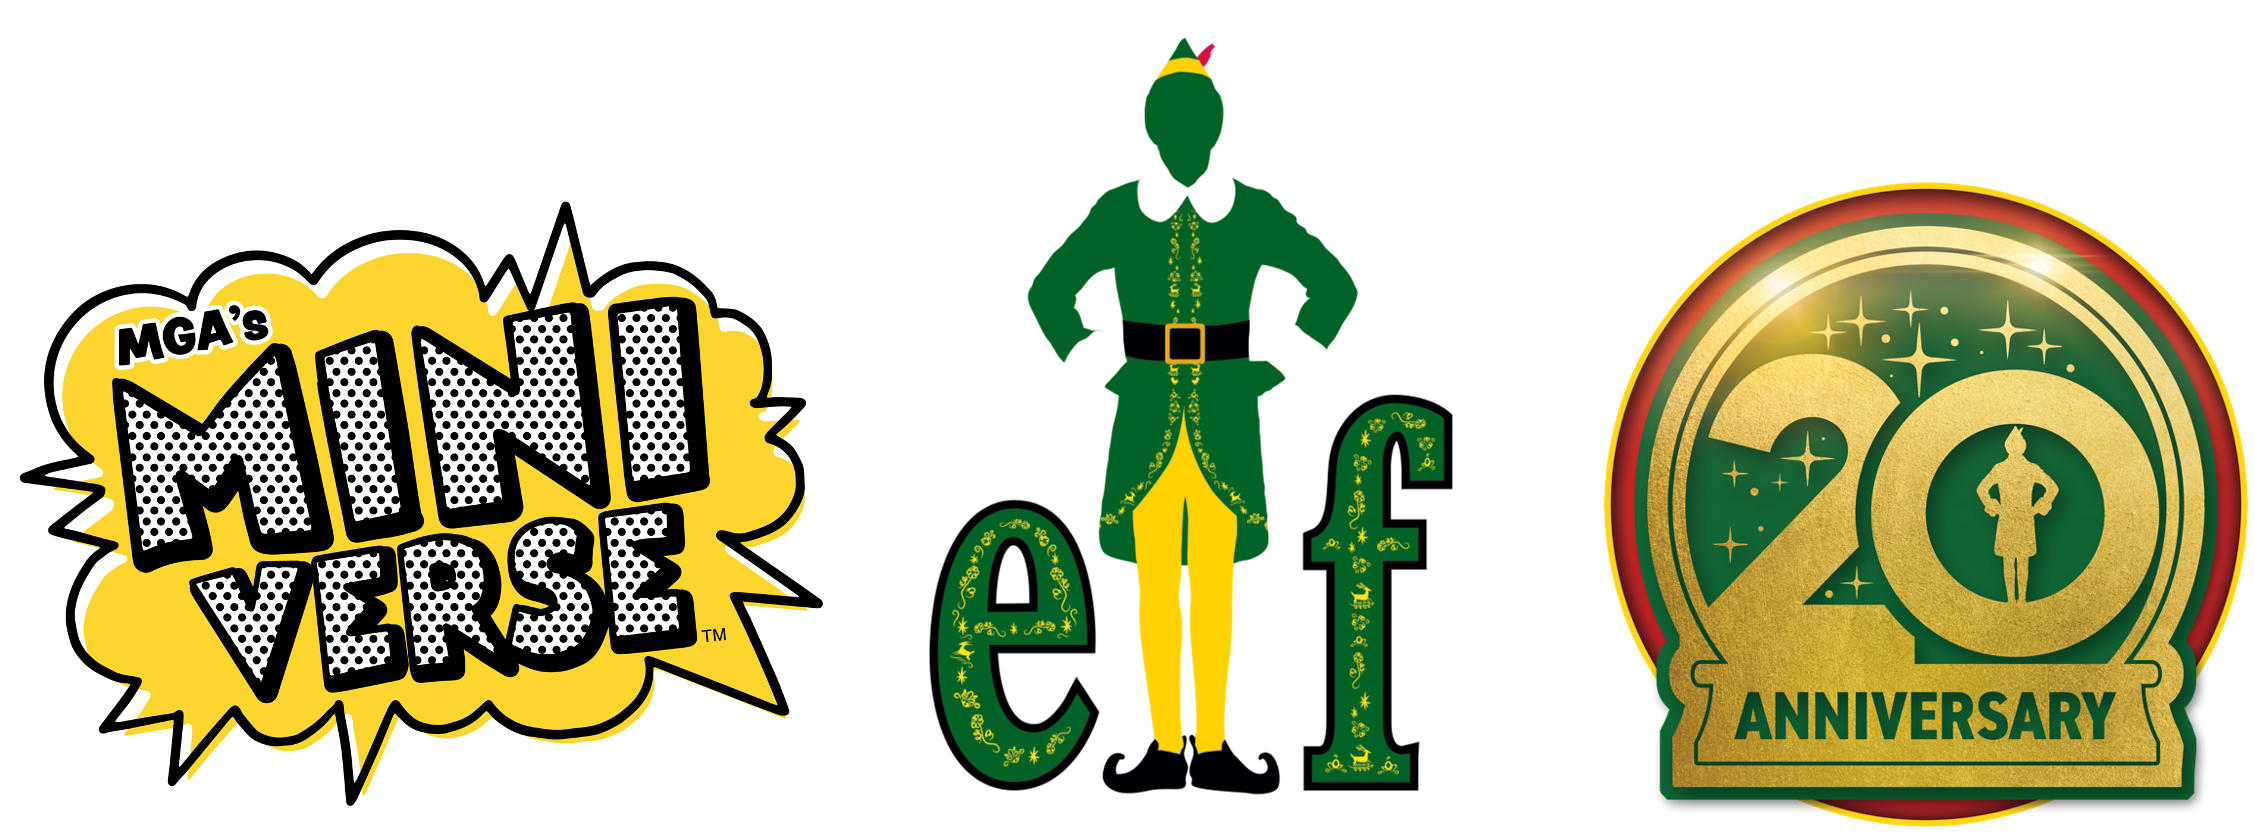 Miniverse - Elf - Elf 20th Anniversary Logos